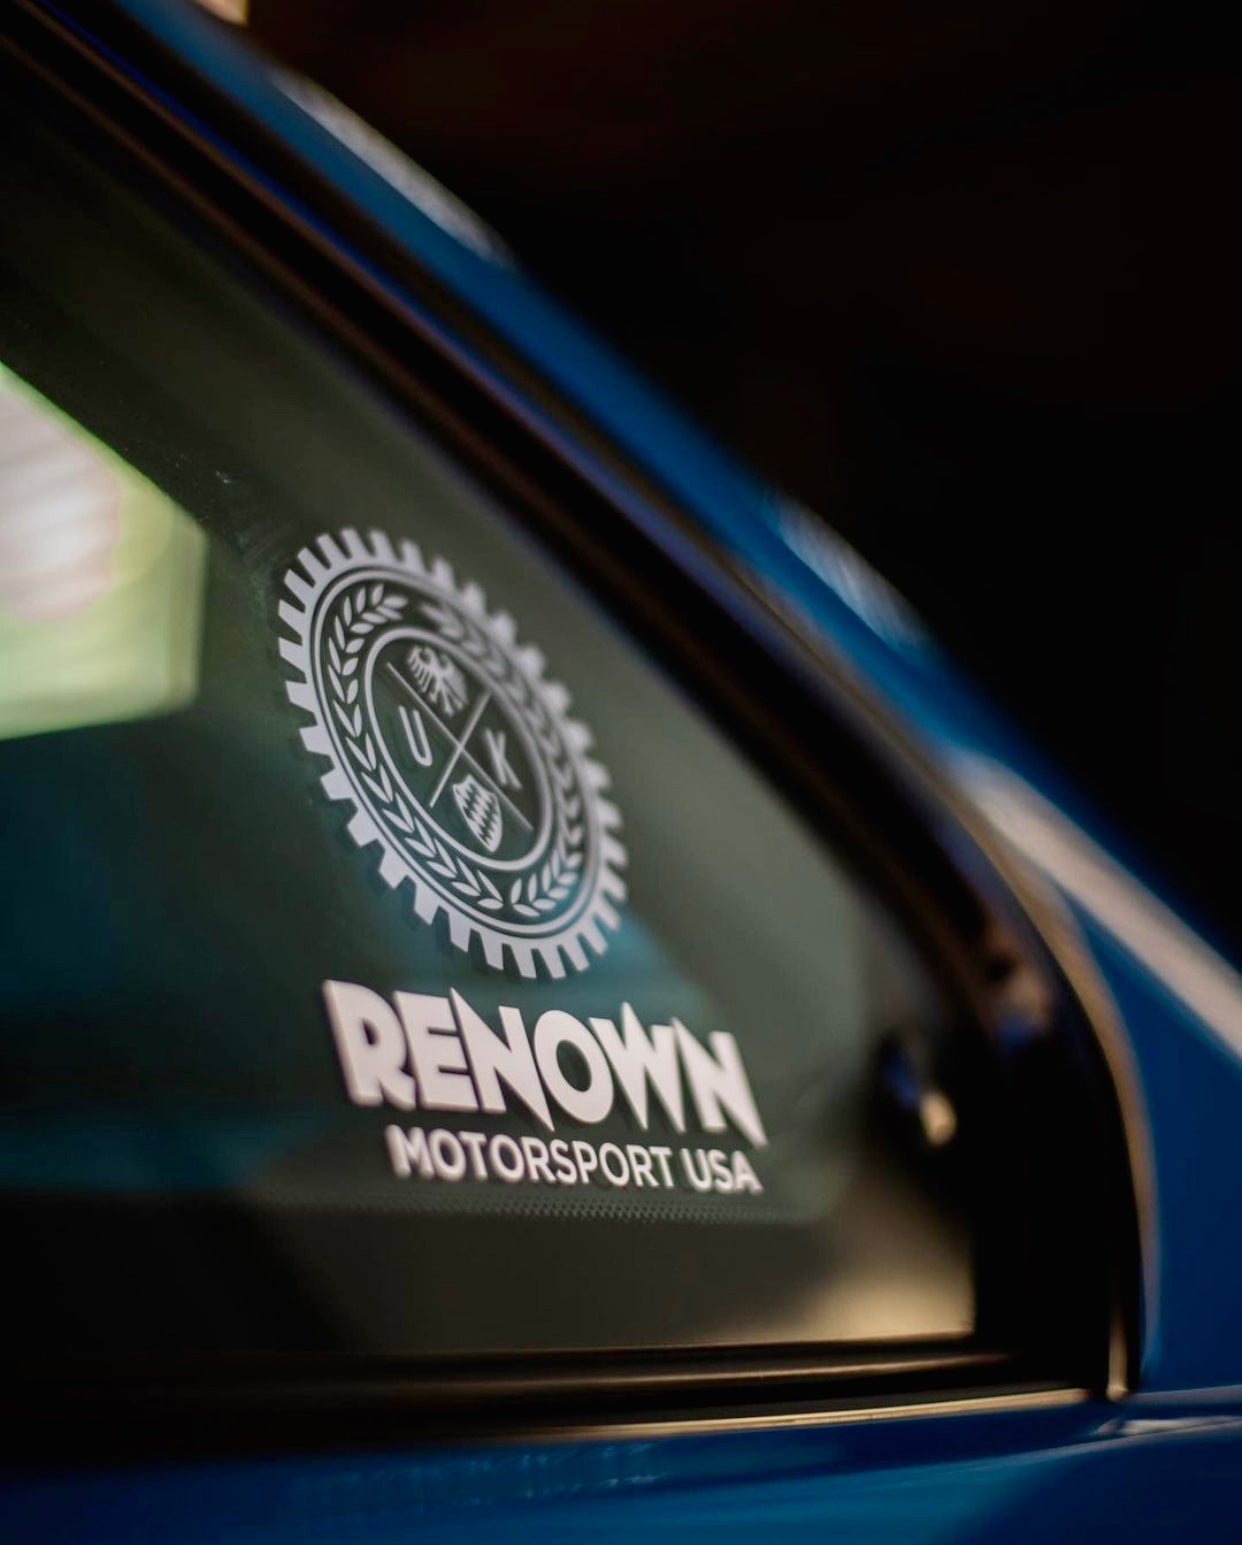 5" Renown Motorsport Badge Decal - Quantity 2